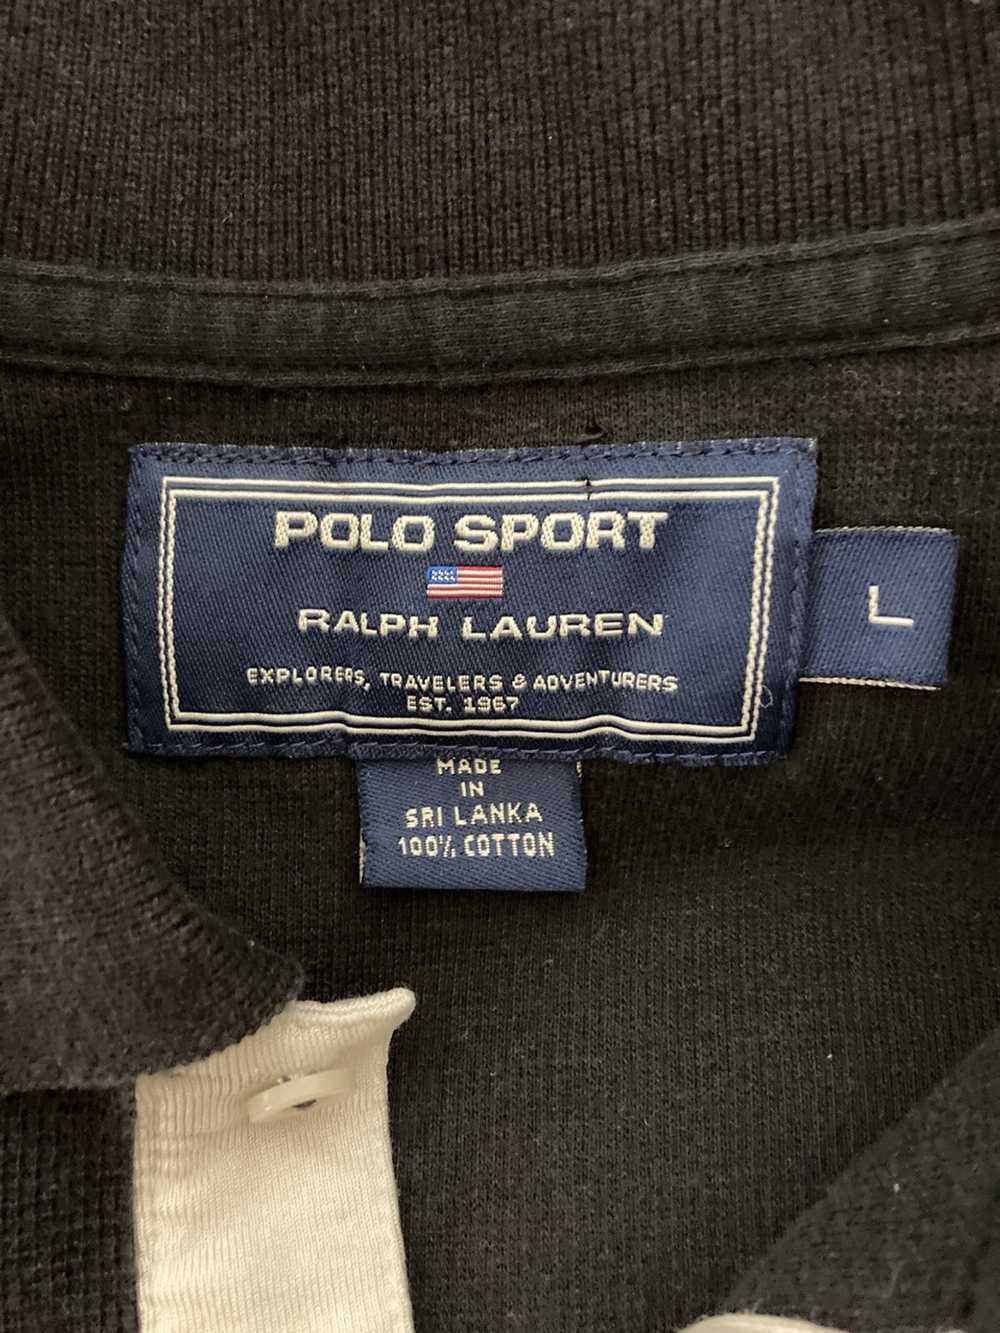 Polo Ralph Lauren Ralph Lauren Polo Sport short s… - image 2